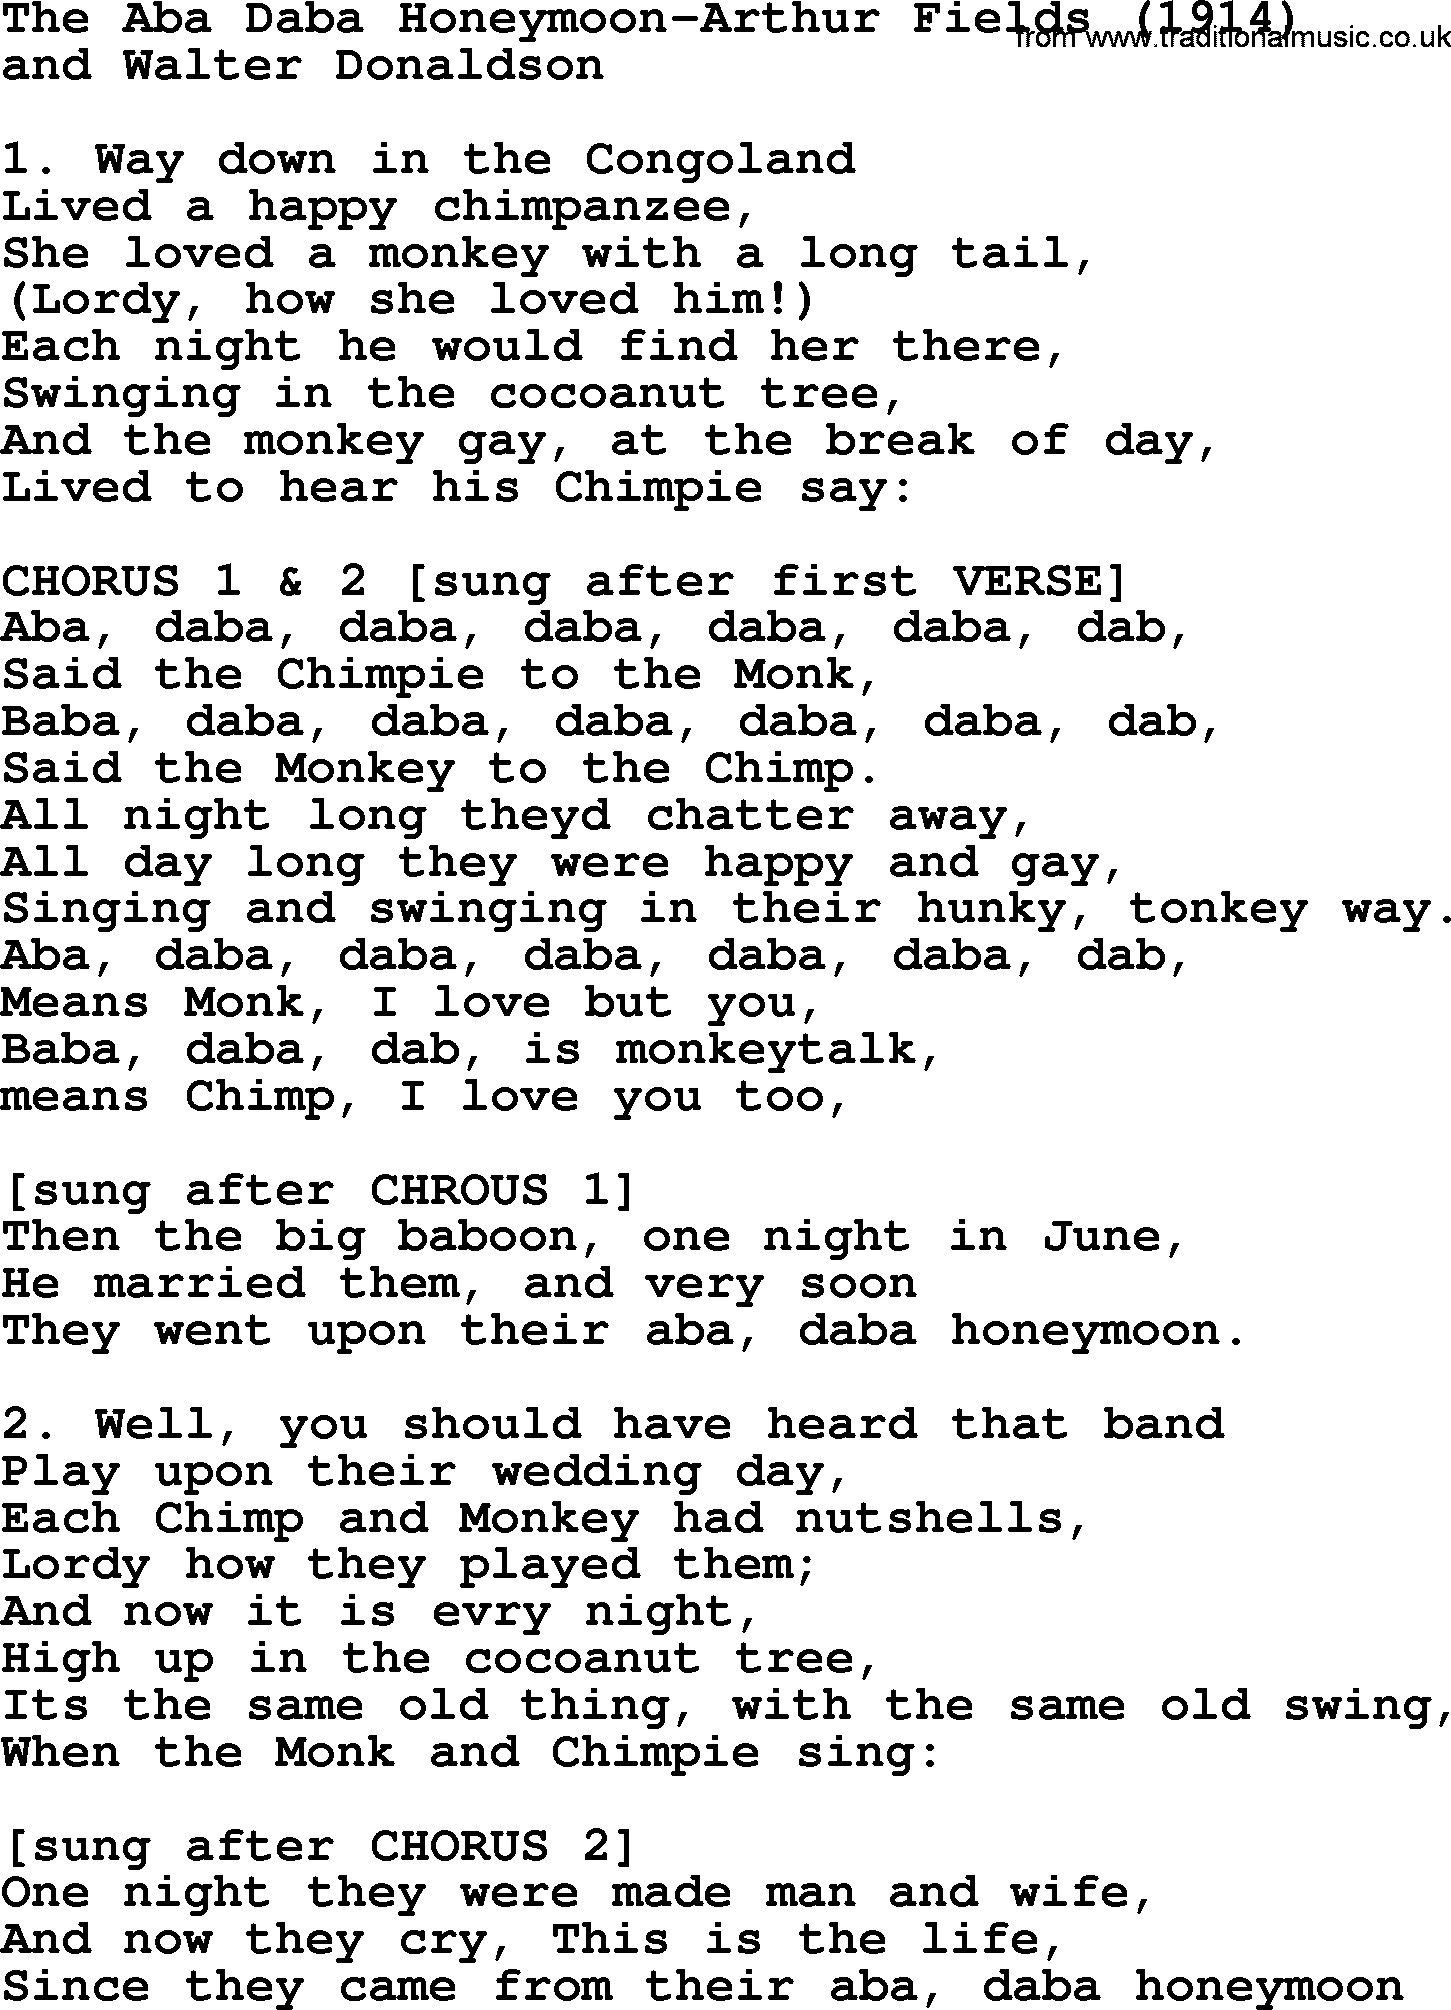 World War(WW1) One Song: The Aba Daba Honeymoon-Arthur Fields 1914, lyrics and PDF